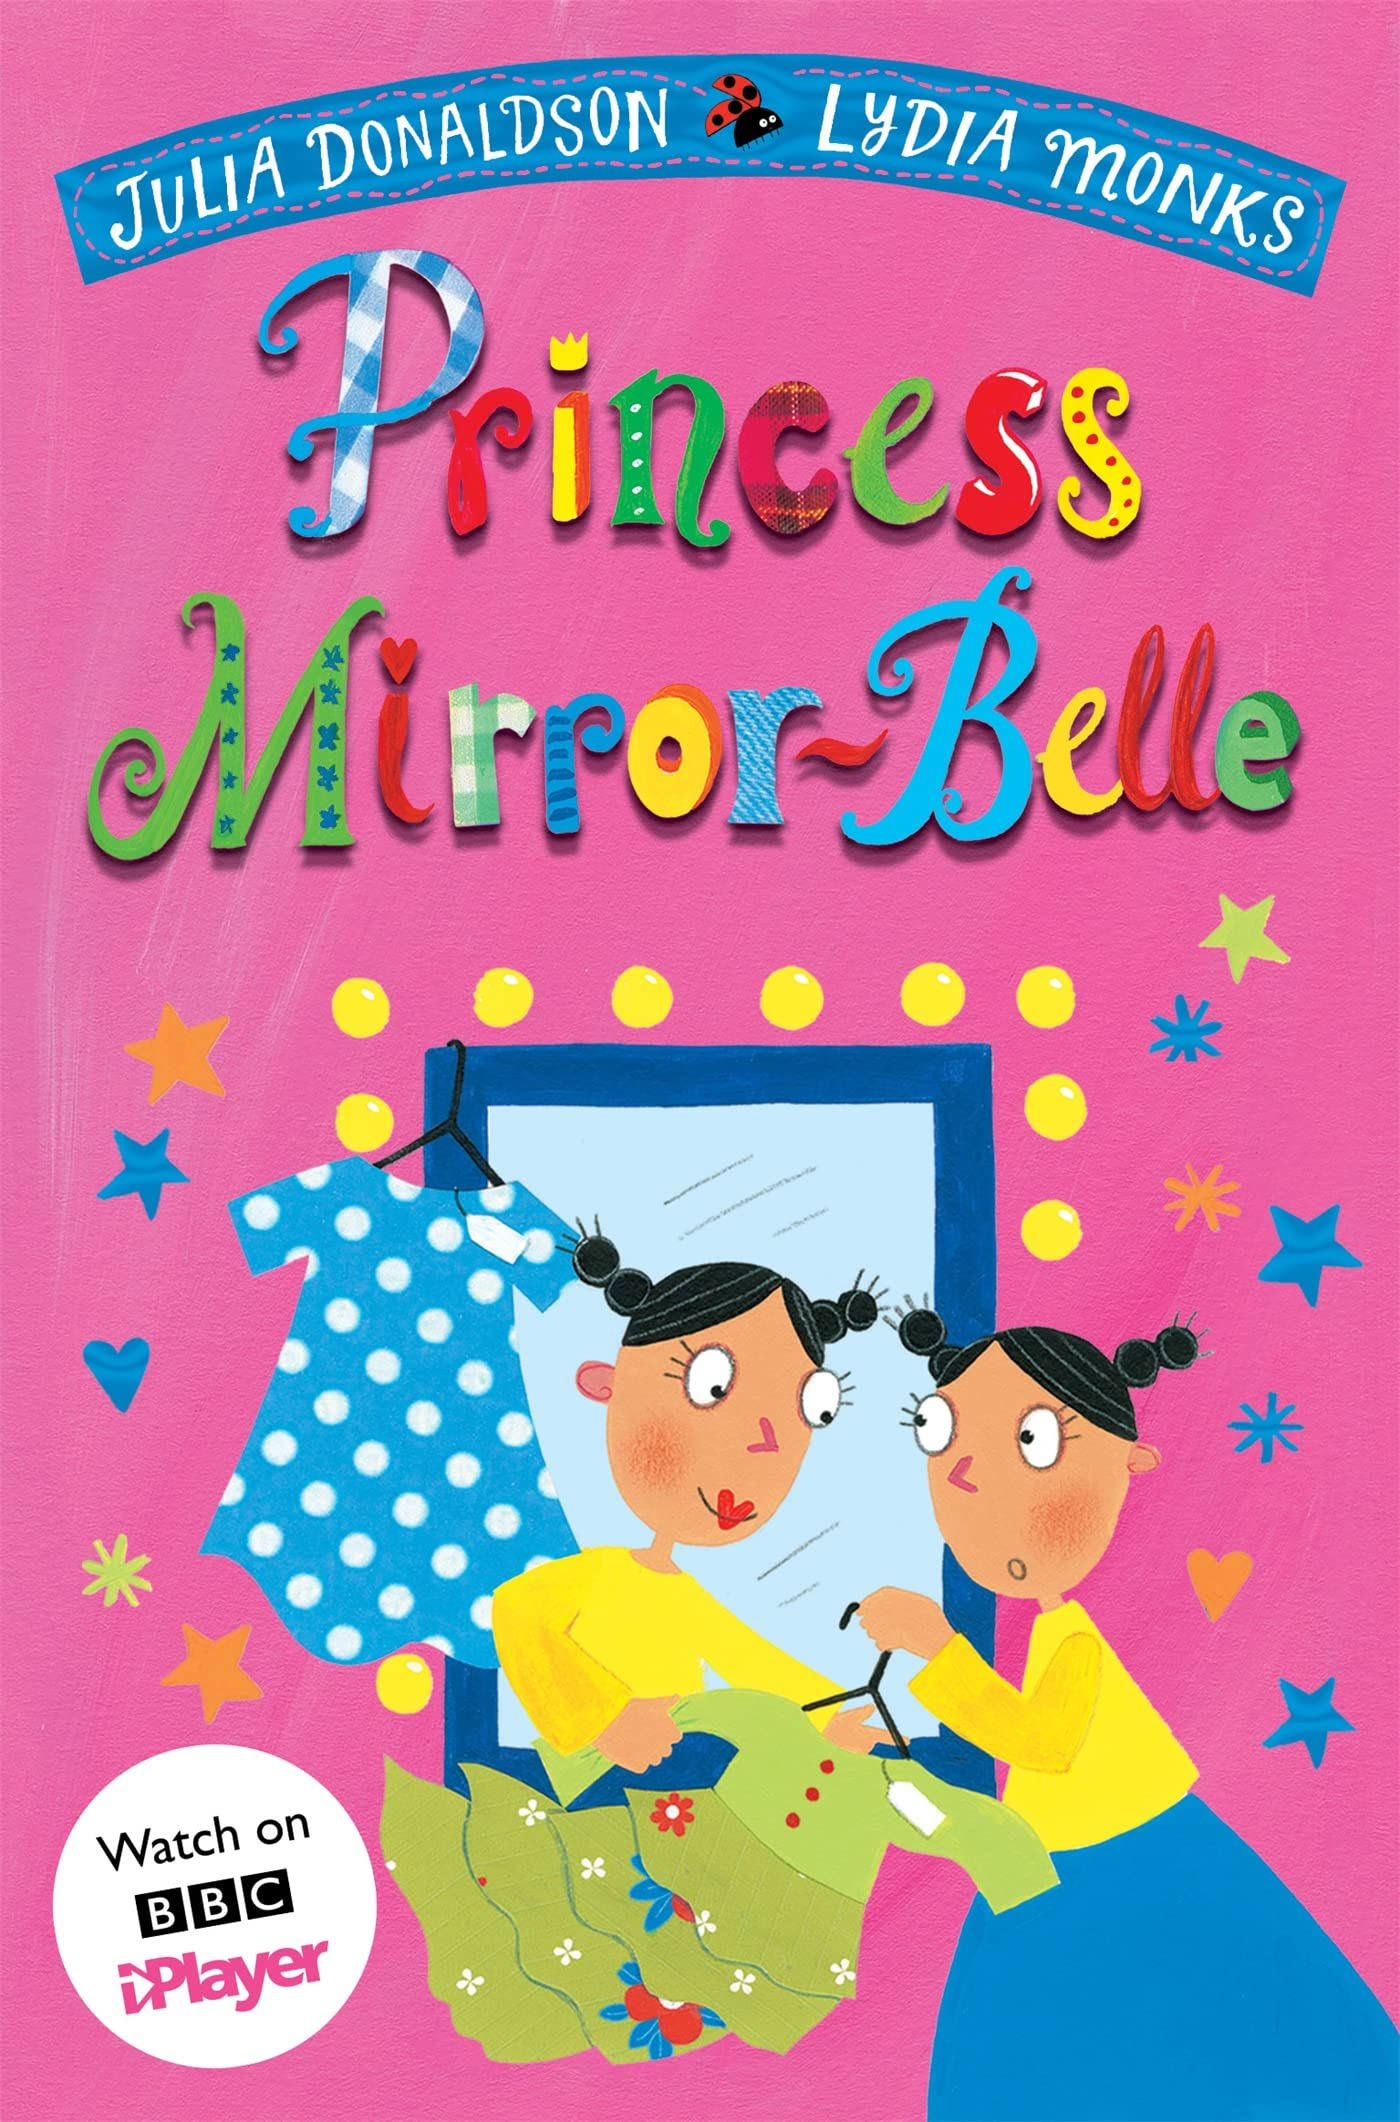 Princess Mirror-Belle [Book]